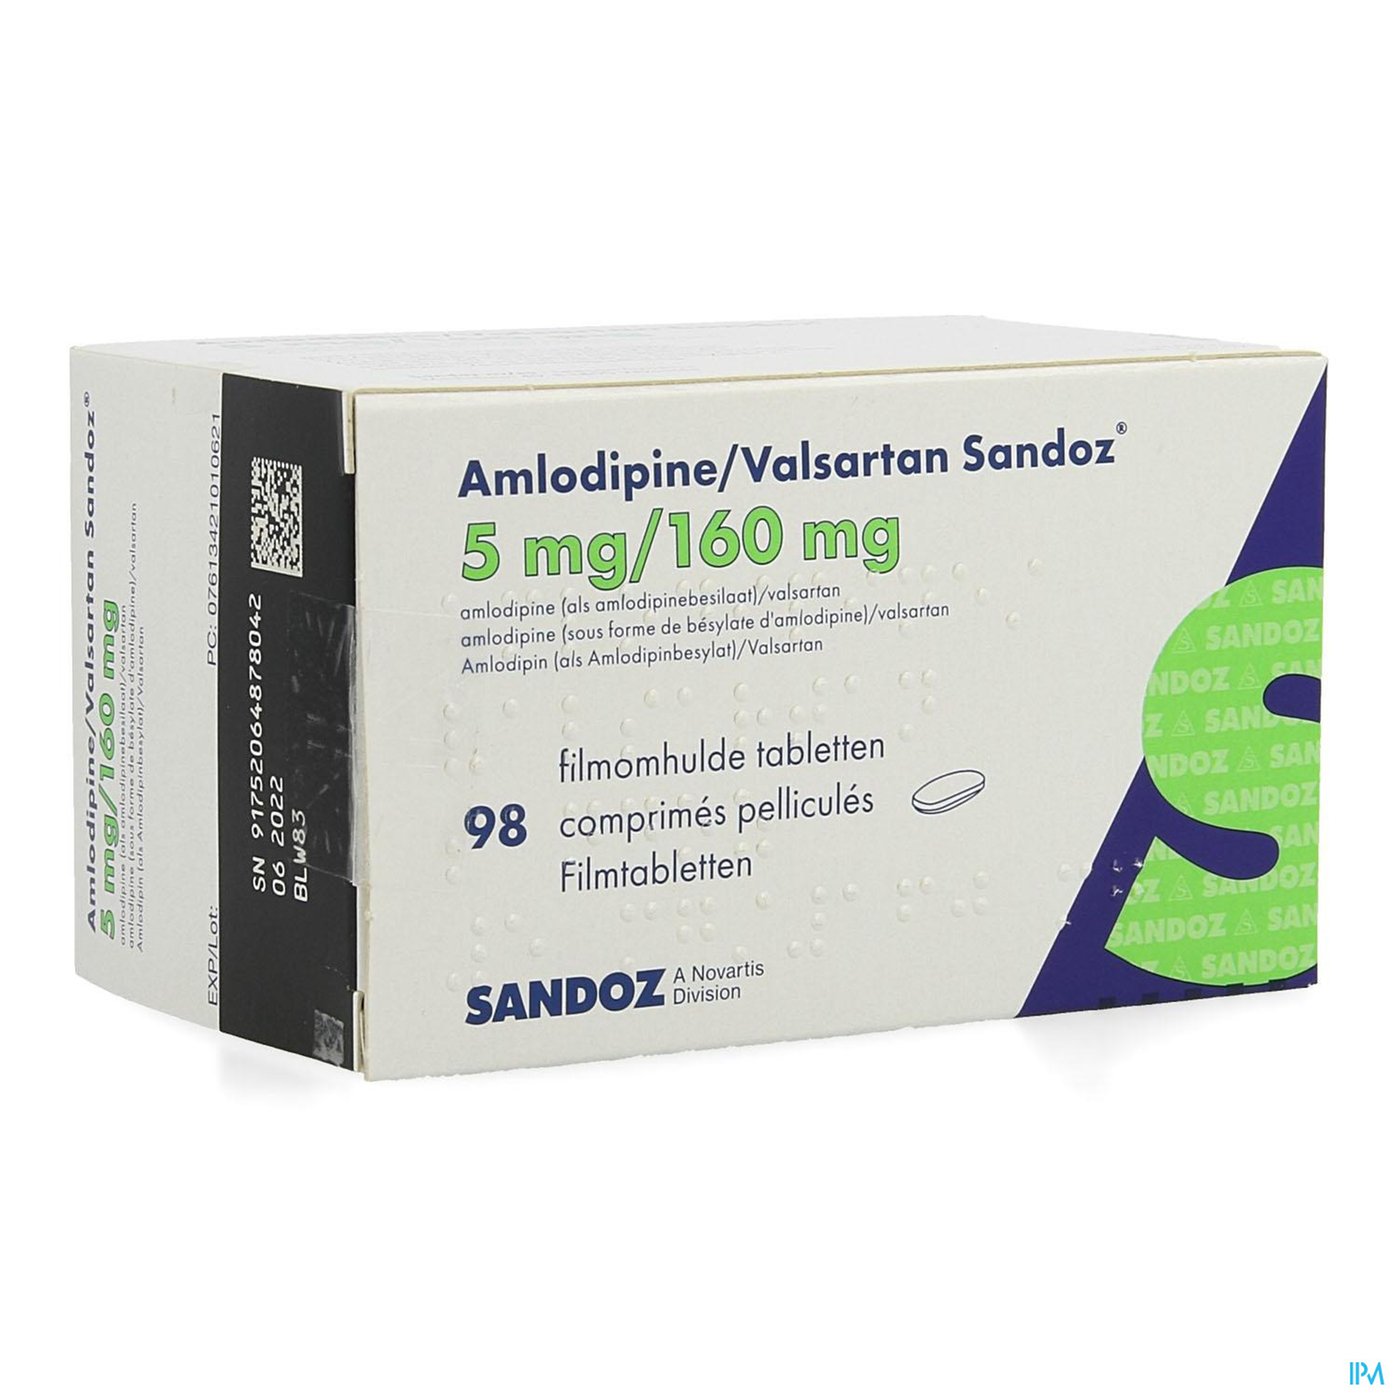 Amlodipine Valsartan Sandoz 5mg/160mg Comp 98 packshot